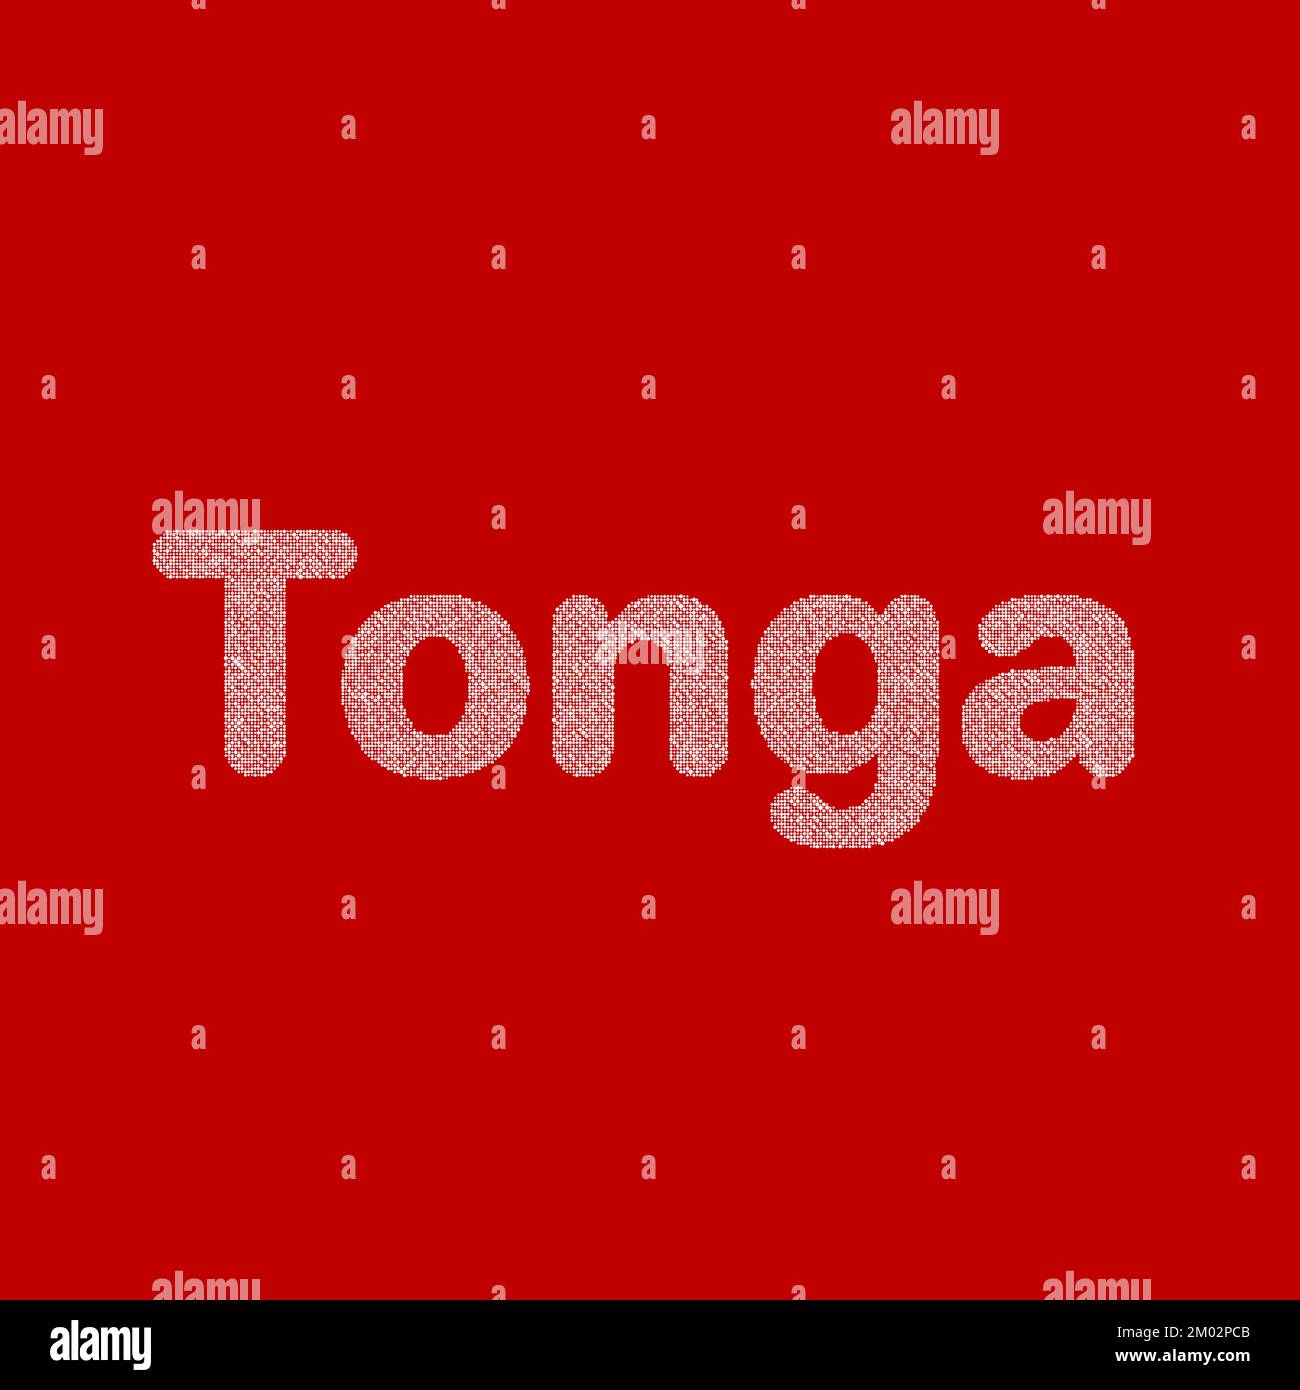 Tonga Map Silhouette verpixelt abgeleitete Musterdarstellung Stock Vektor